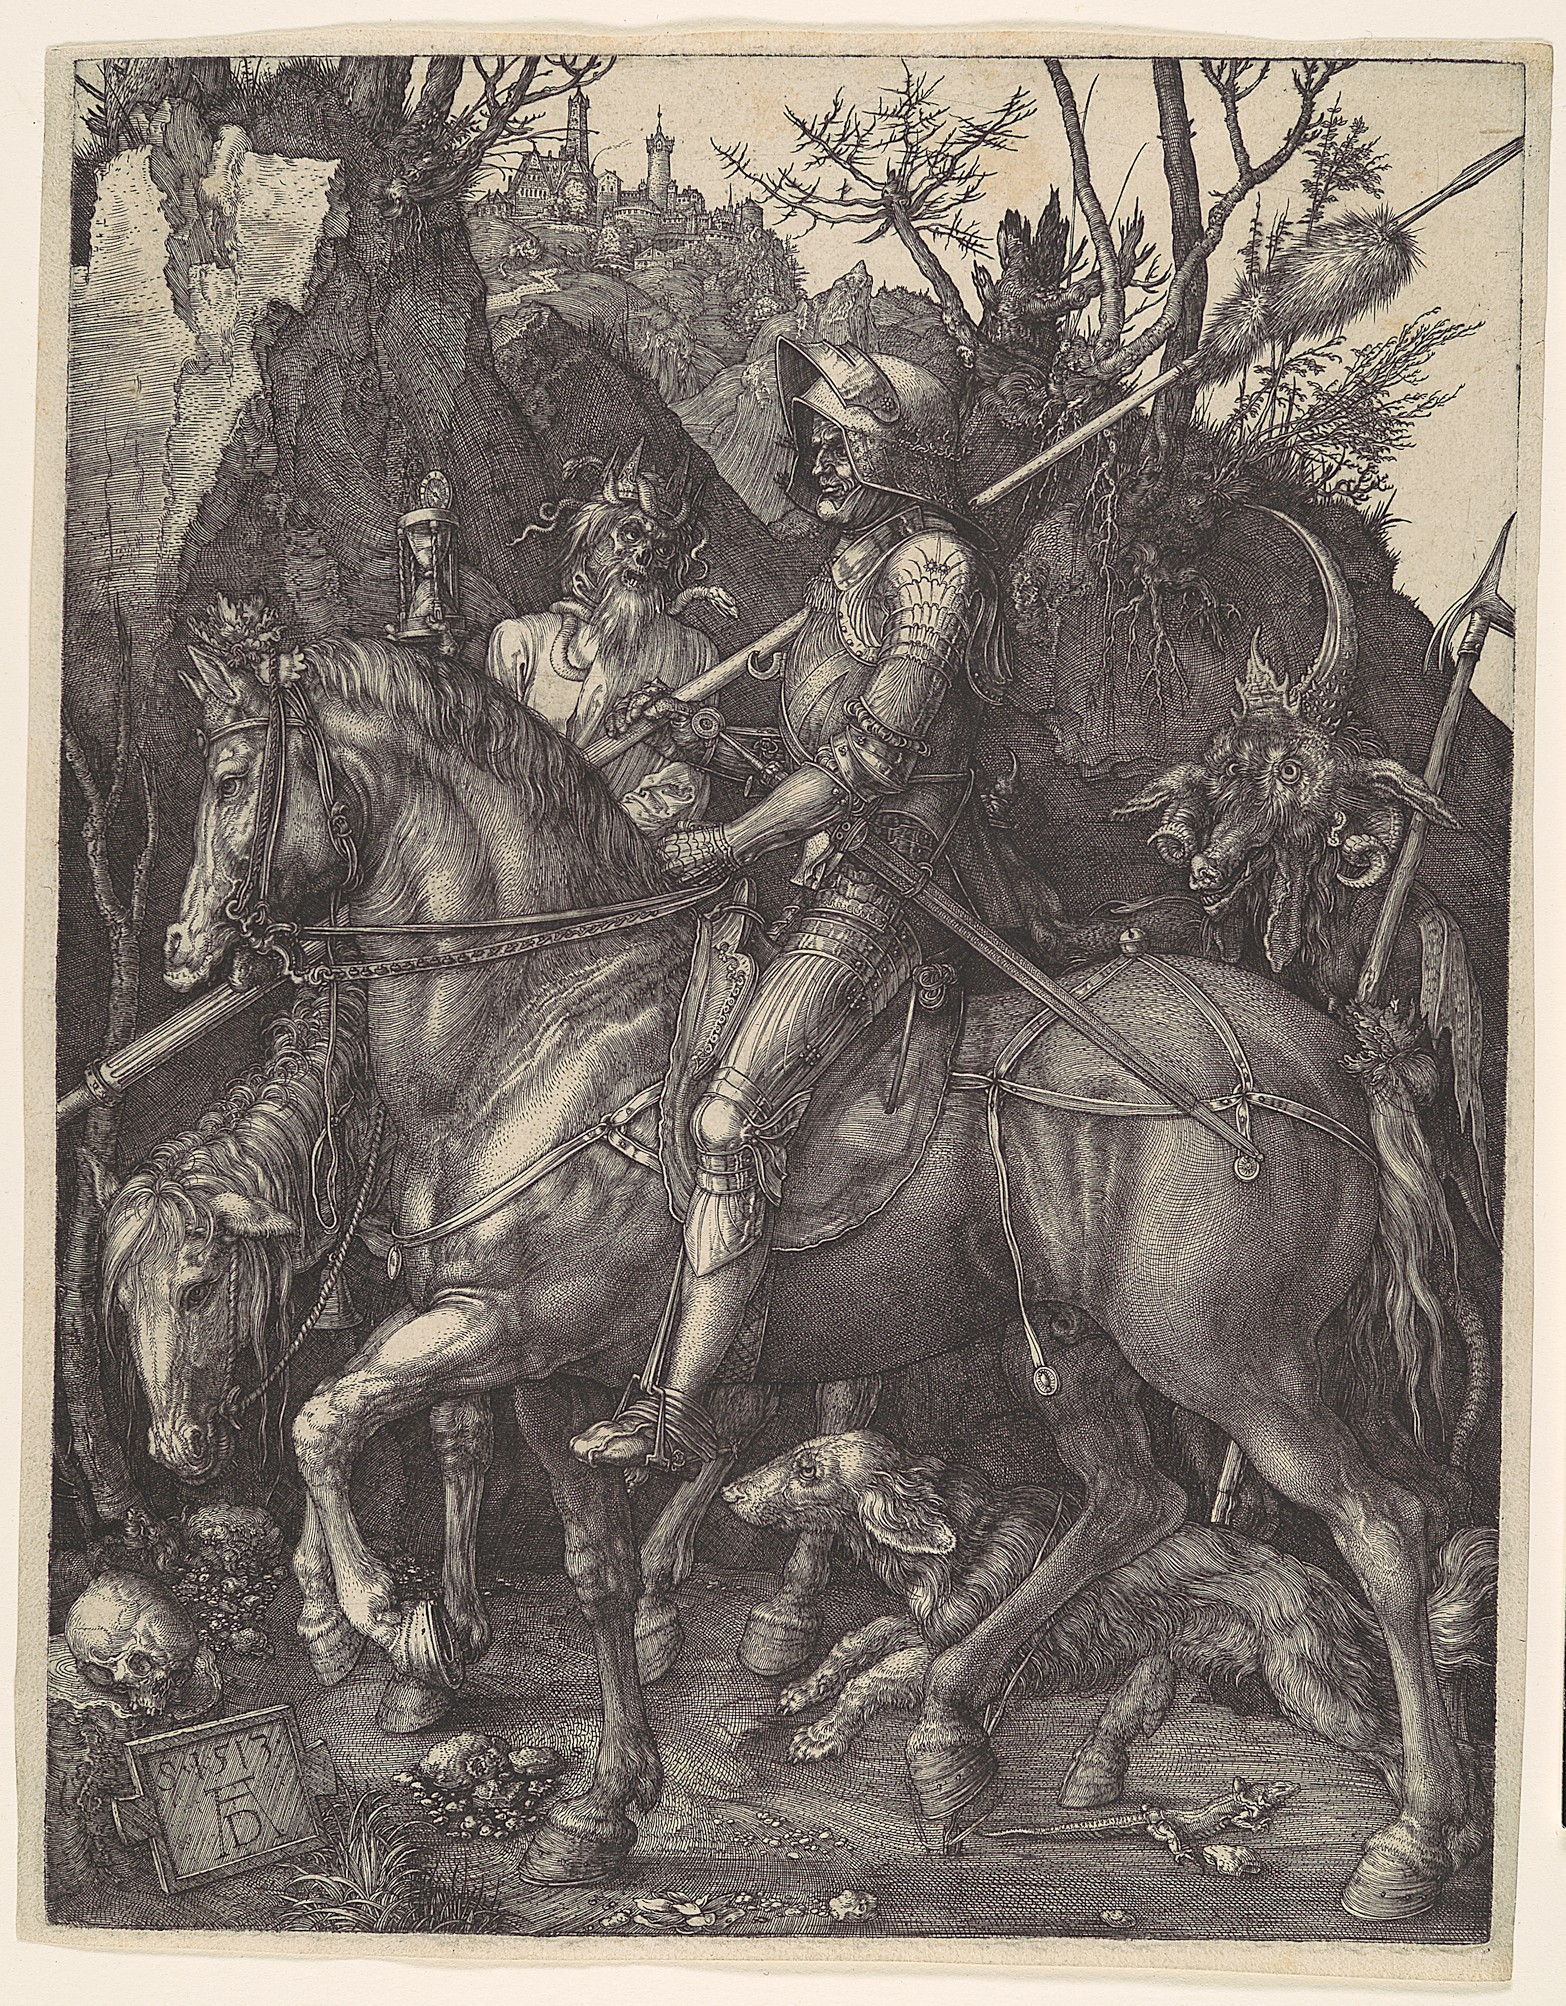 Albrecht Dürer, Knight, Death, and the Devil, 1513, print after engraving, 25 x 19.6 cm (The Metropolitan Museum of Art)